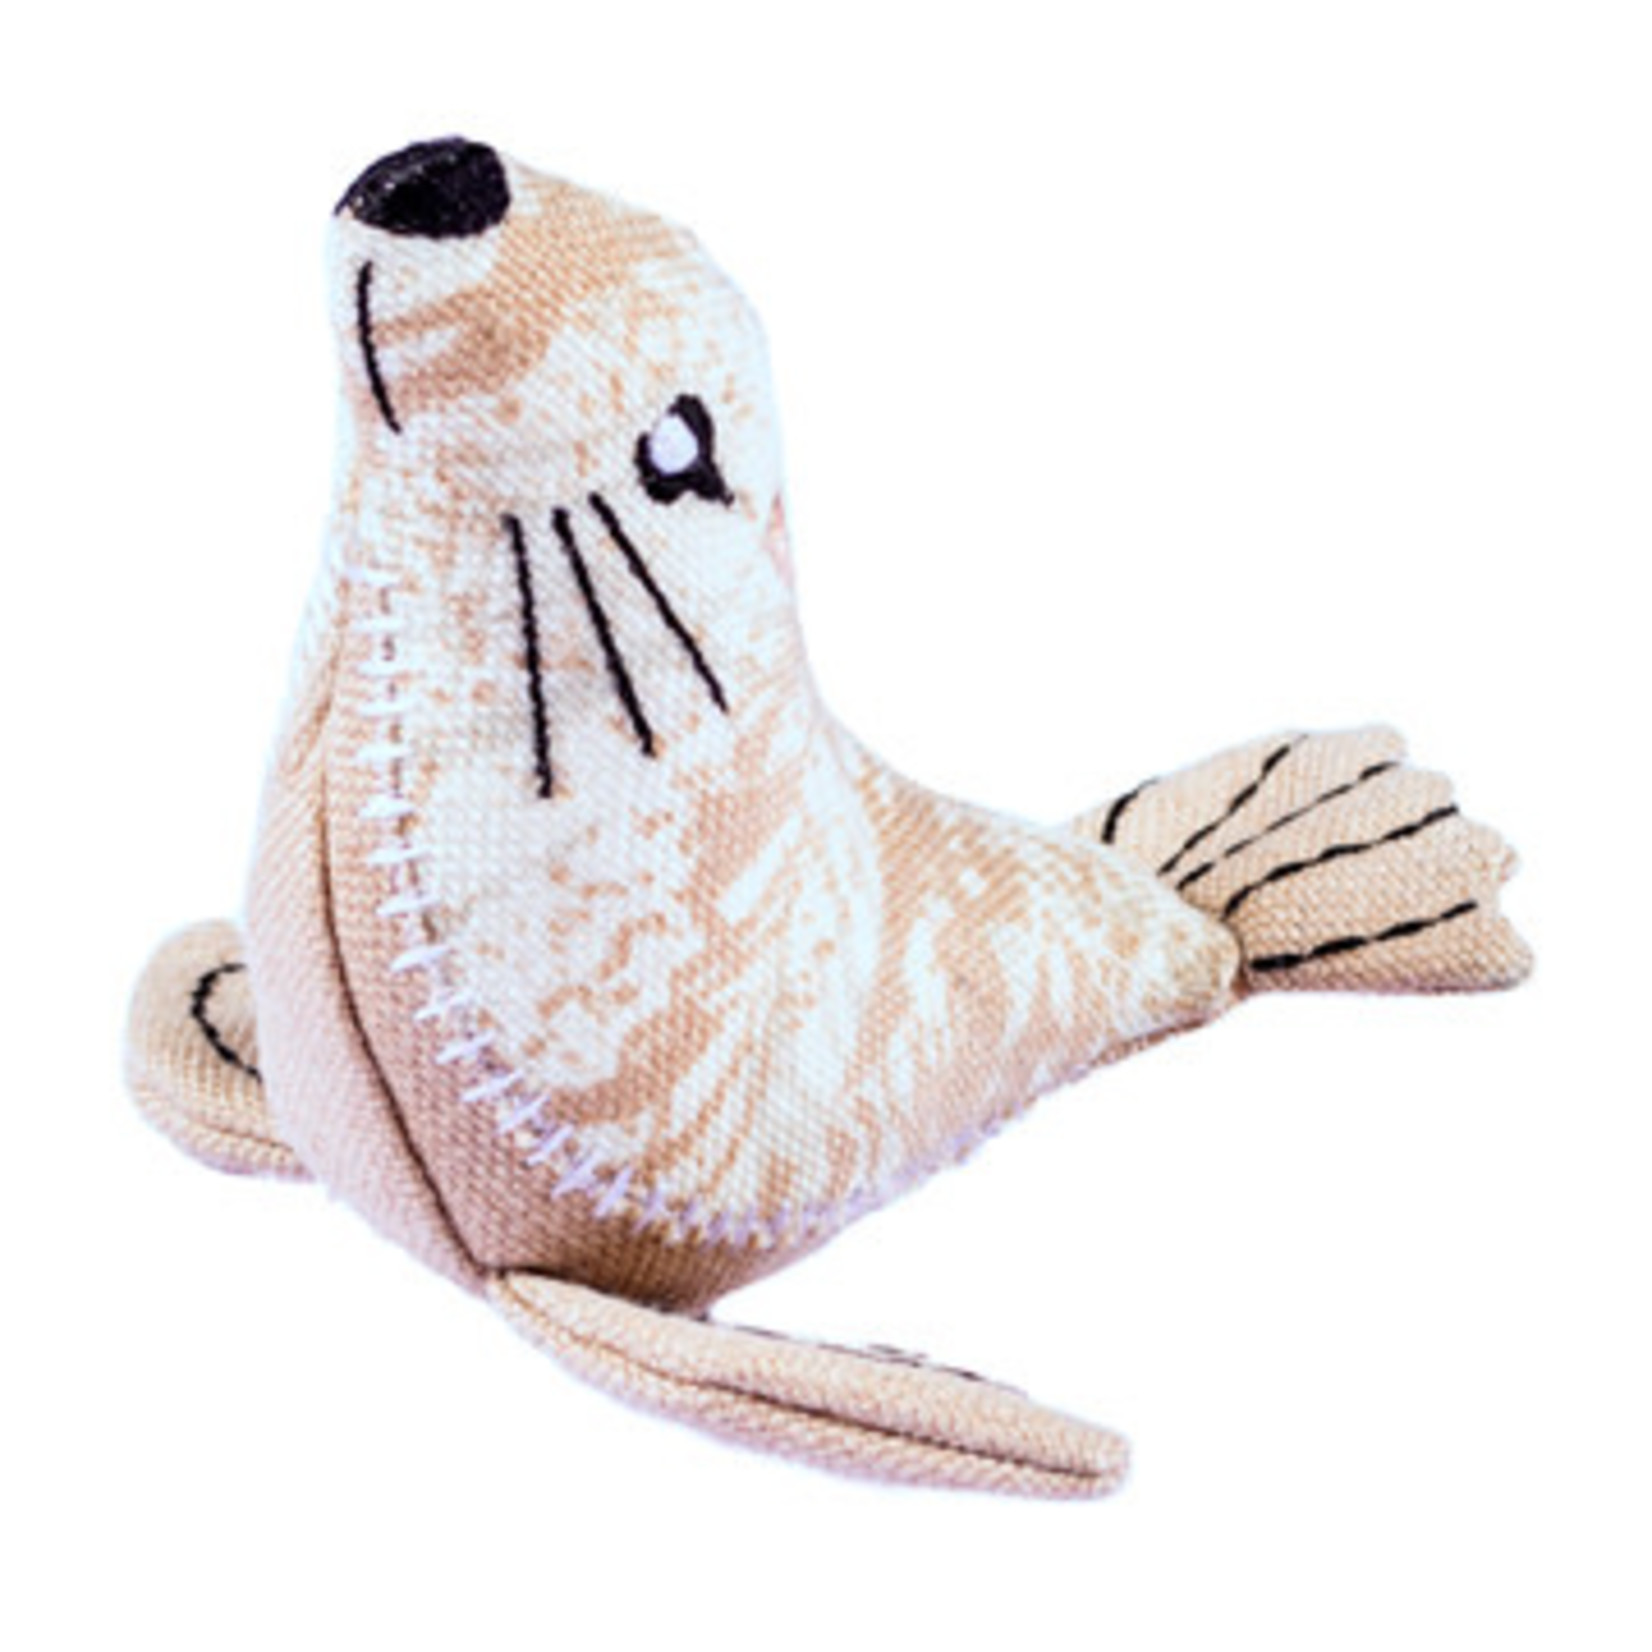 Resploot Toy Resploot Plush Toy - Sea Lion - Ecuador - 17 x 20 cm (7 x 8 in)